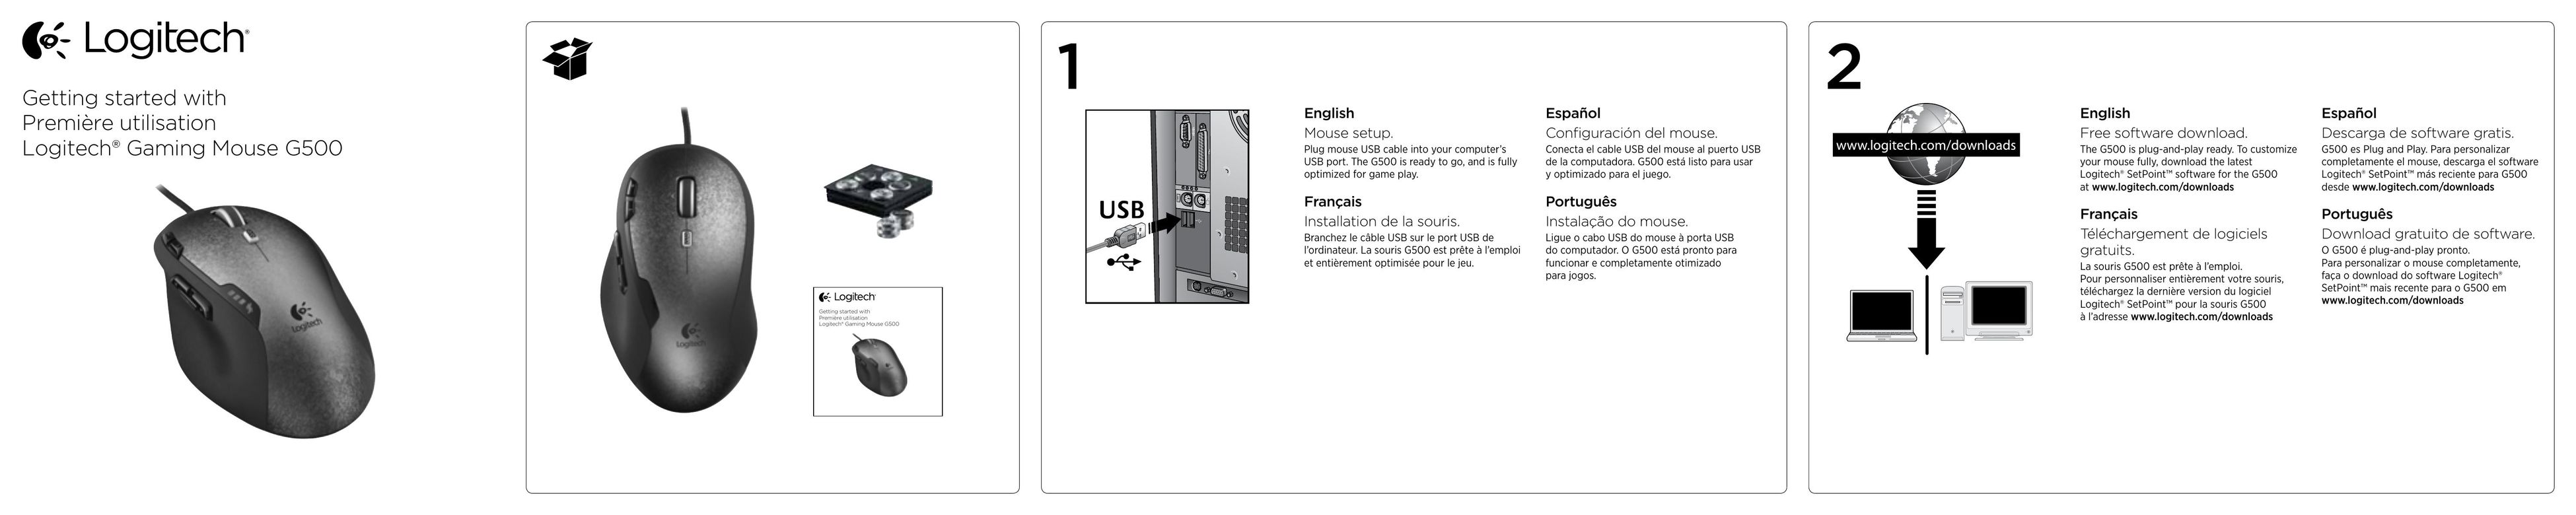 Logitech G500 Mouse User Manual